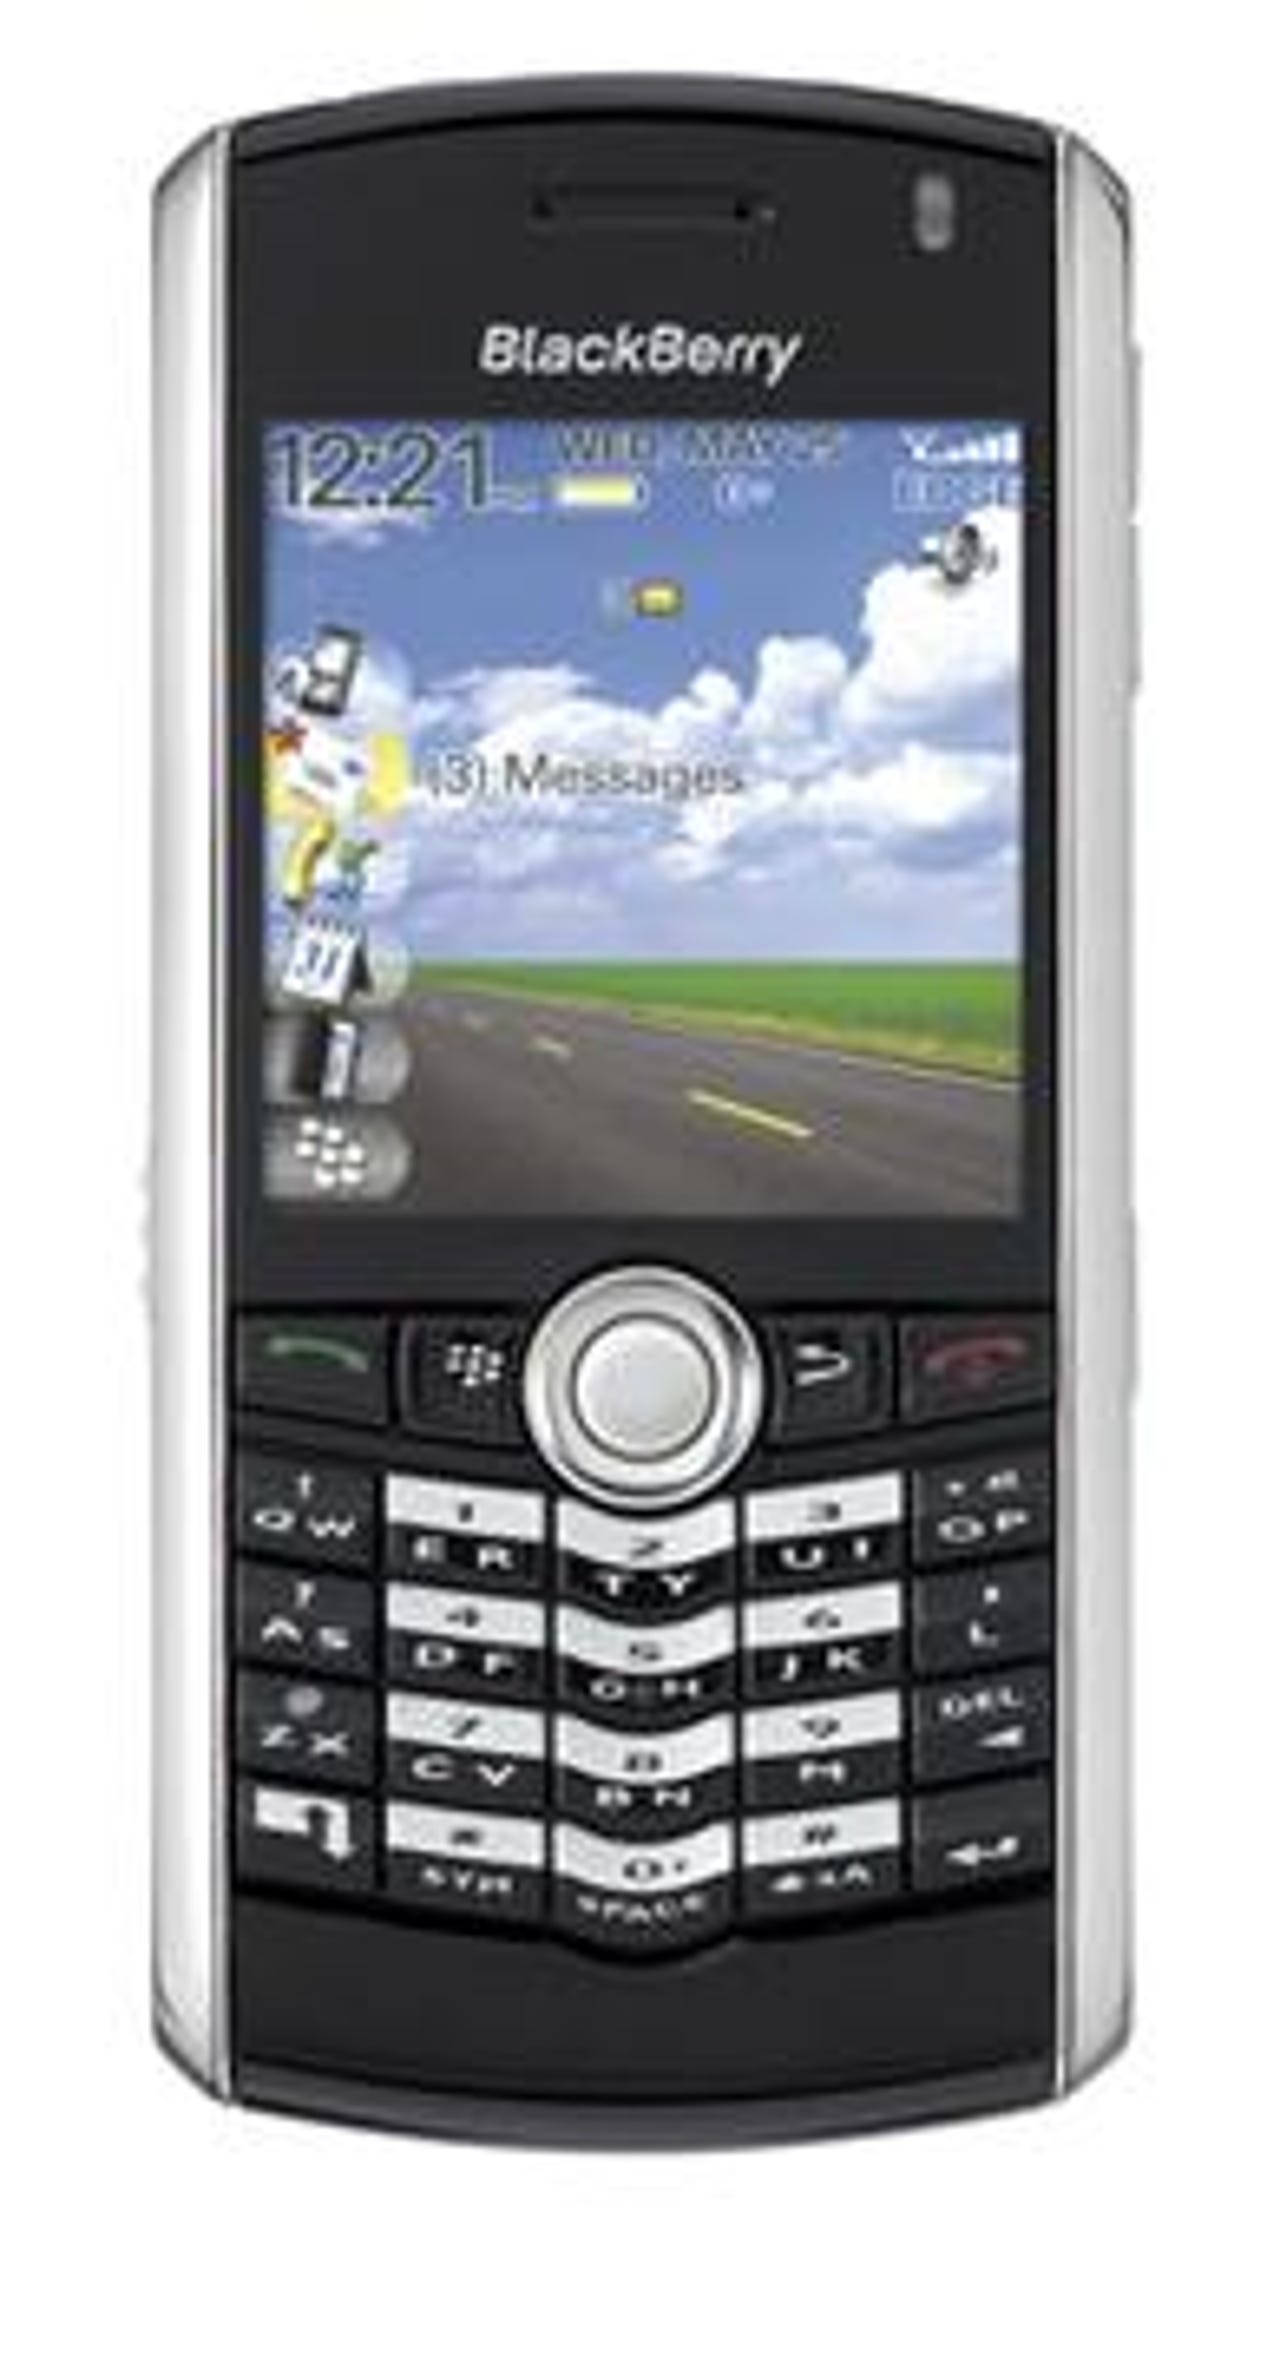 40149533-7-blackberry-8100-front-view-no-shadow-custom.jpg